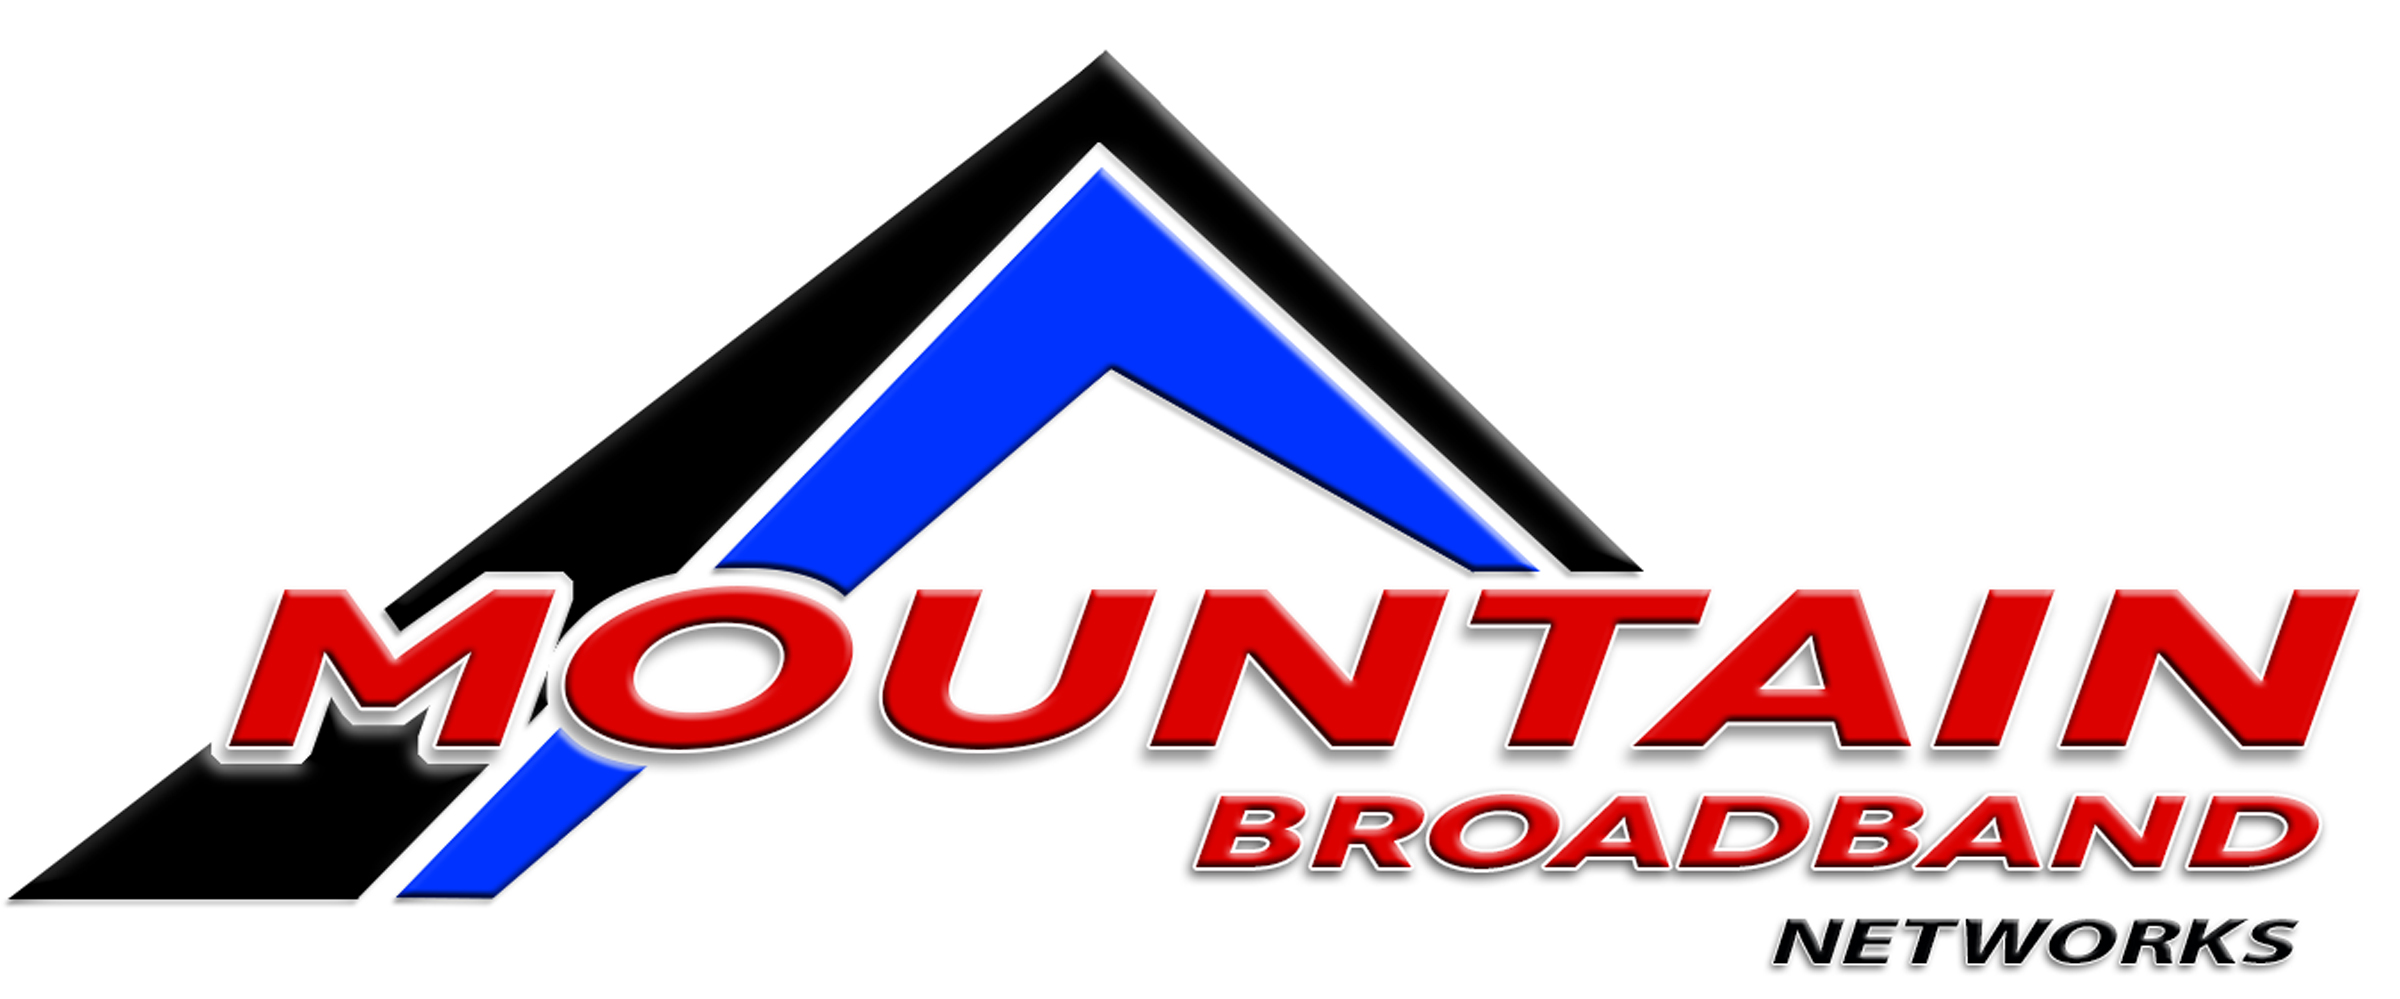 Mountain Cellular Logo photo - 1